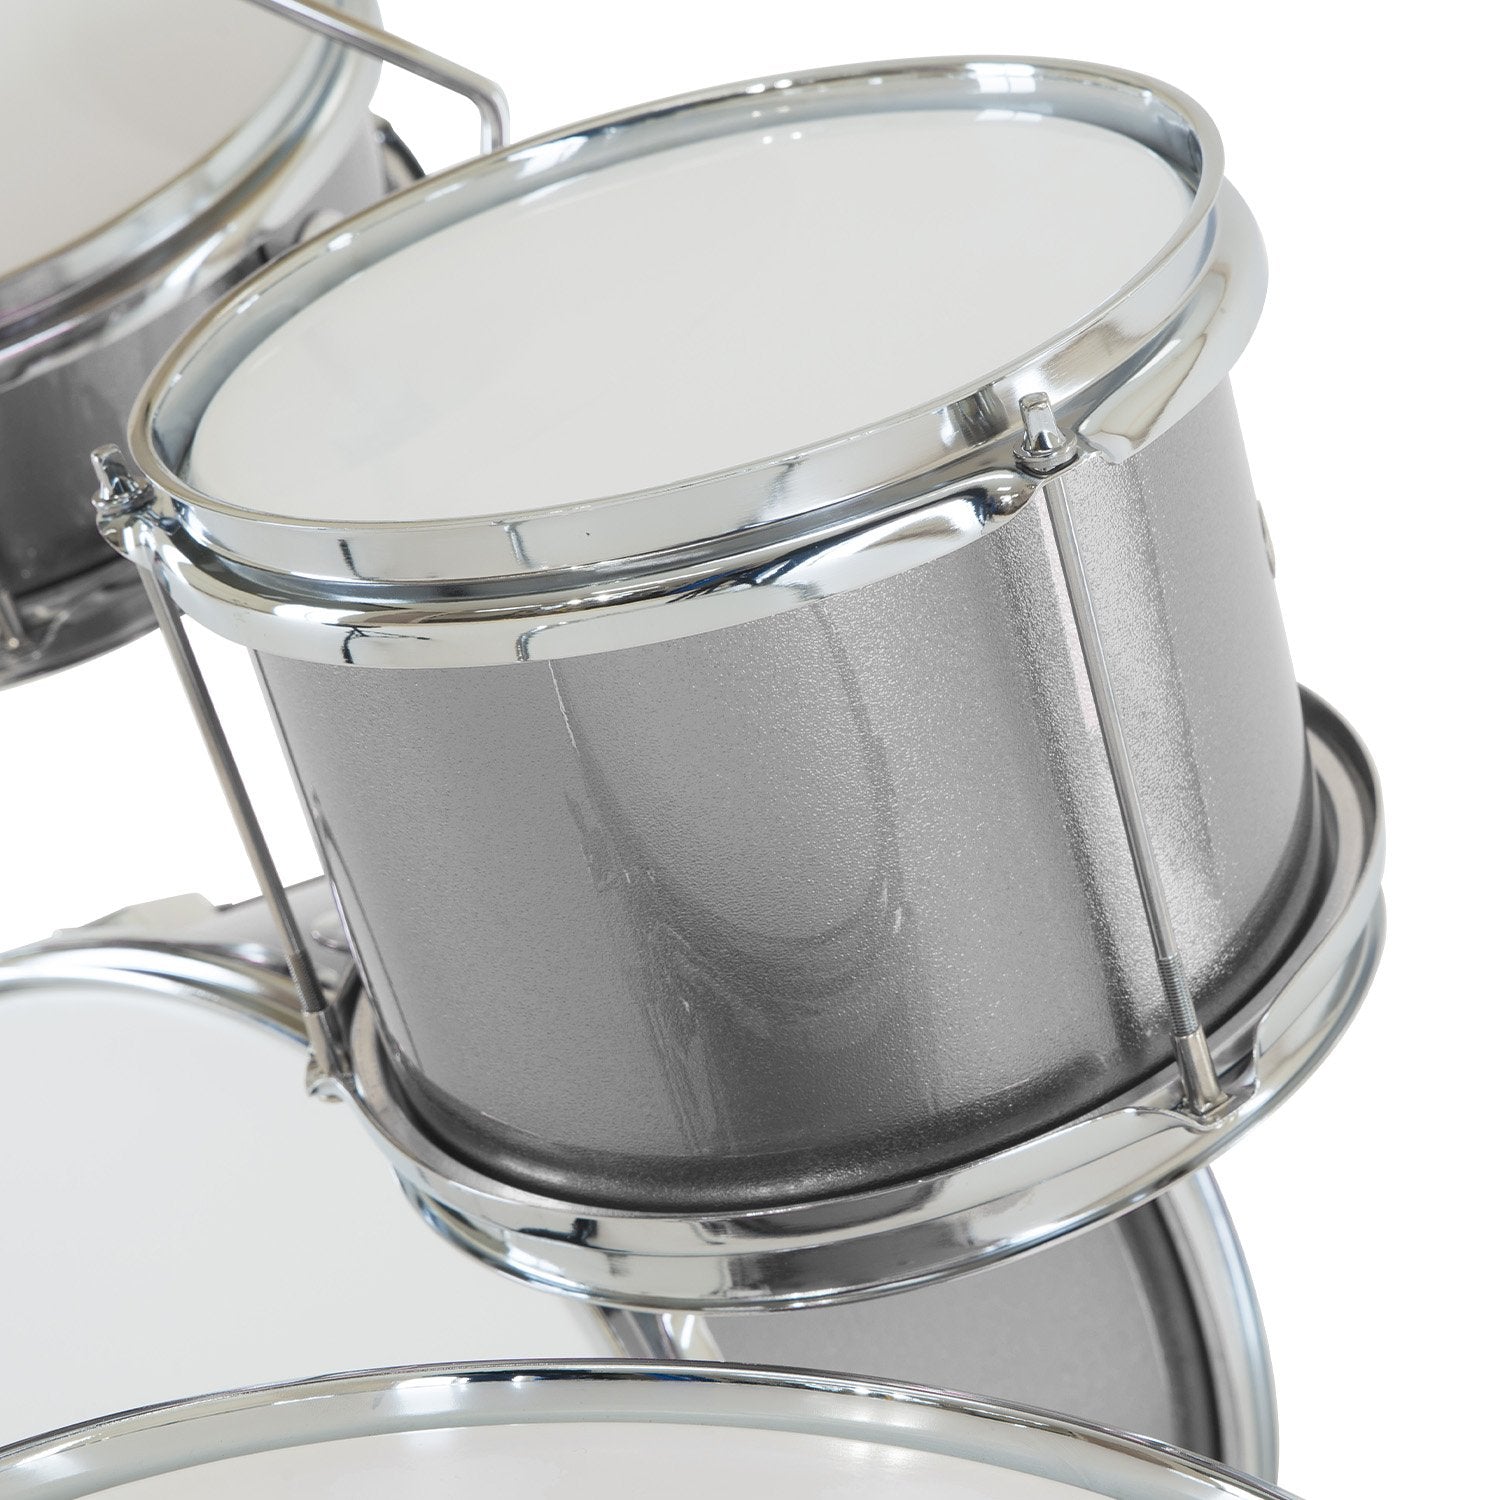 Karrera Childrens 4pc Drum Kit - Silver - SILBERSHELL